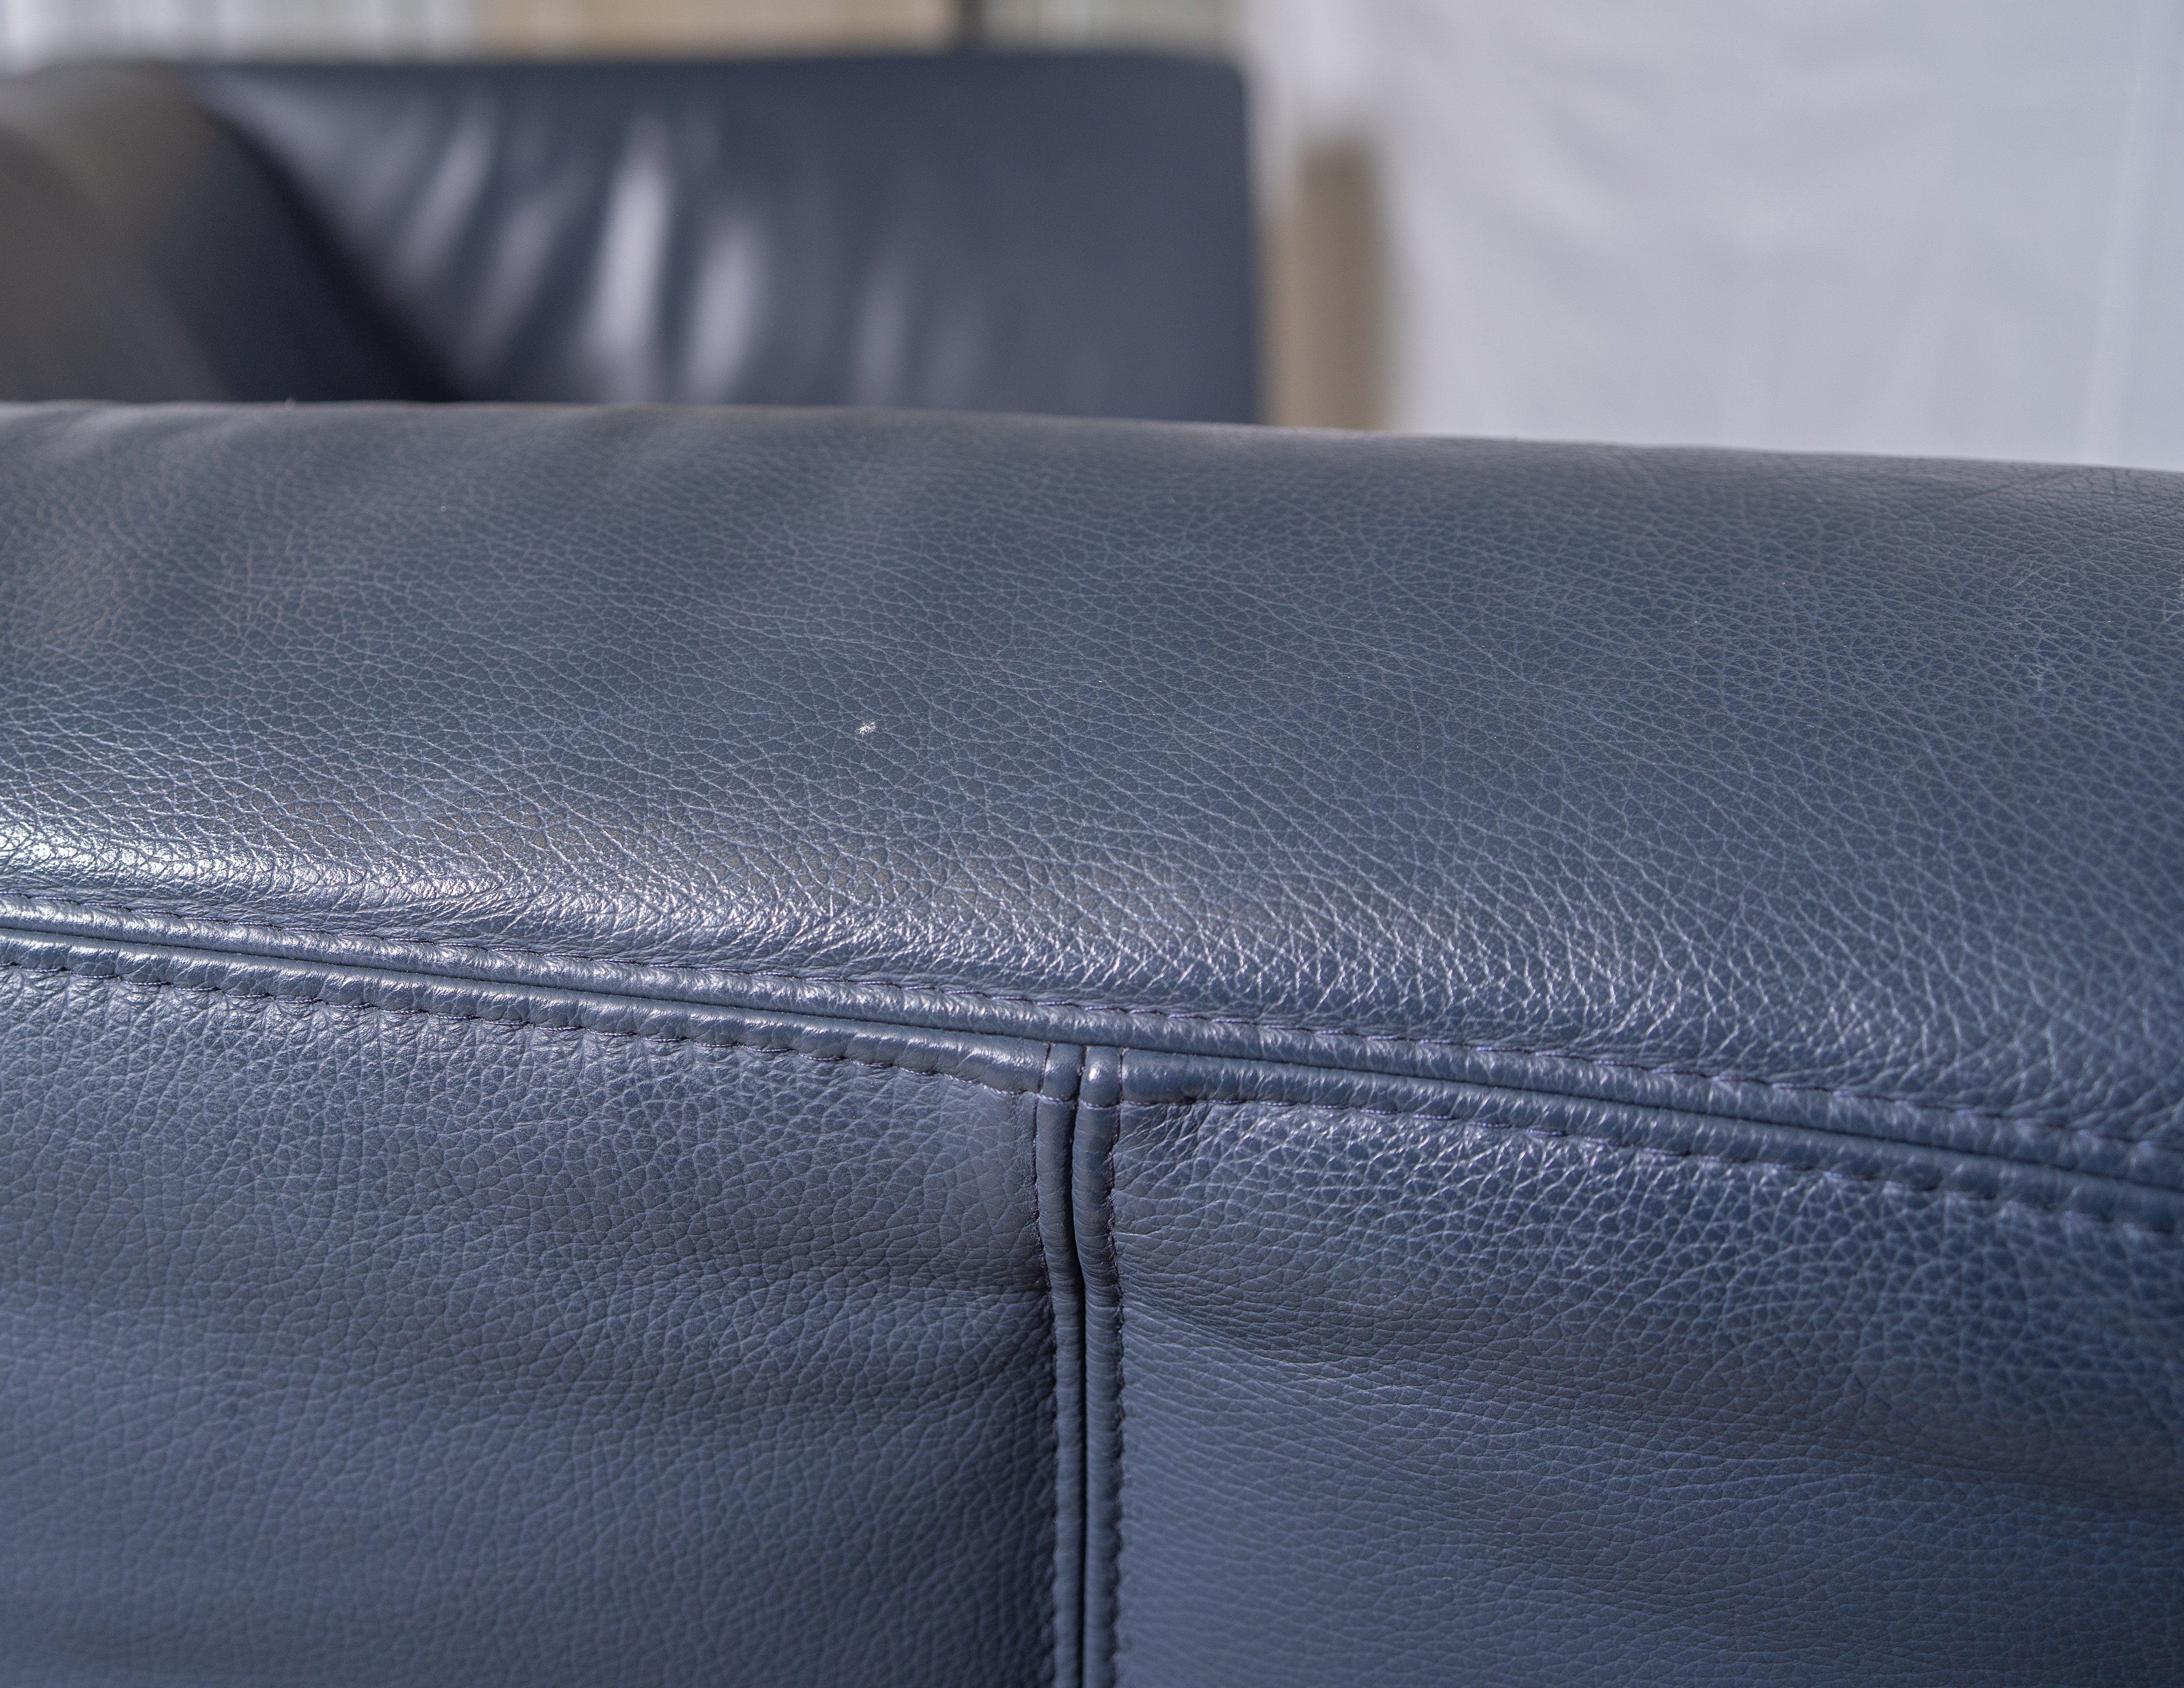 IKEA Custom Dark Blue Leather 3-seater 'Winged' Sofa